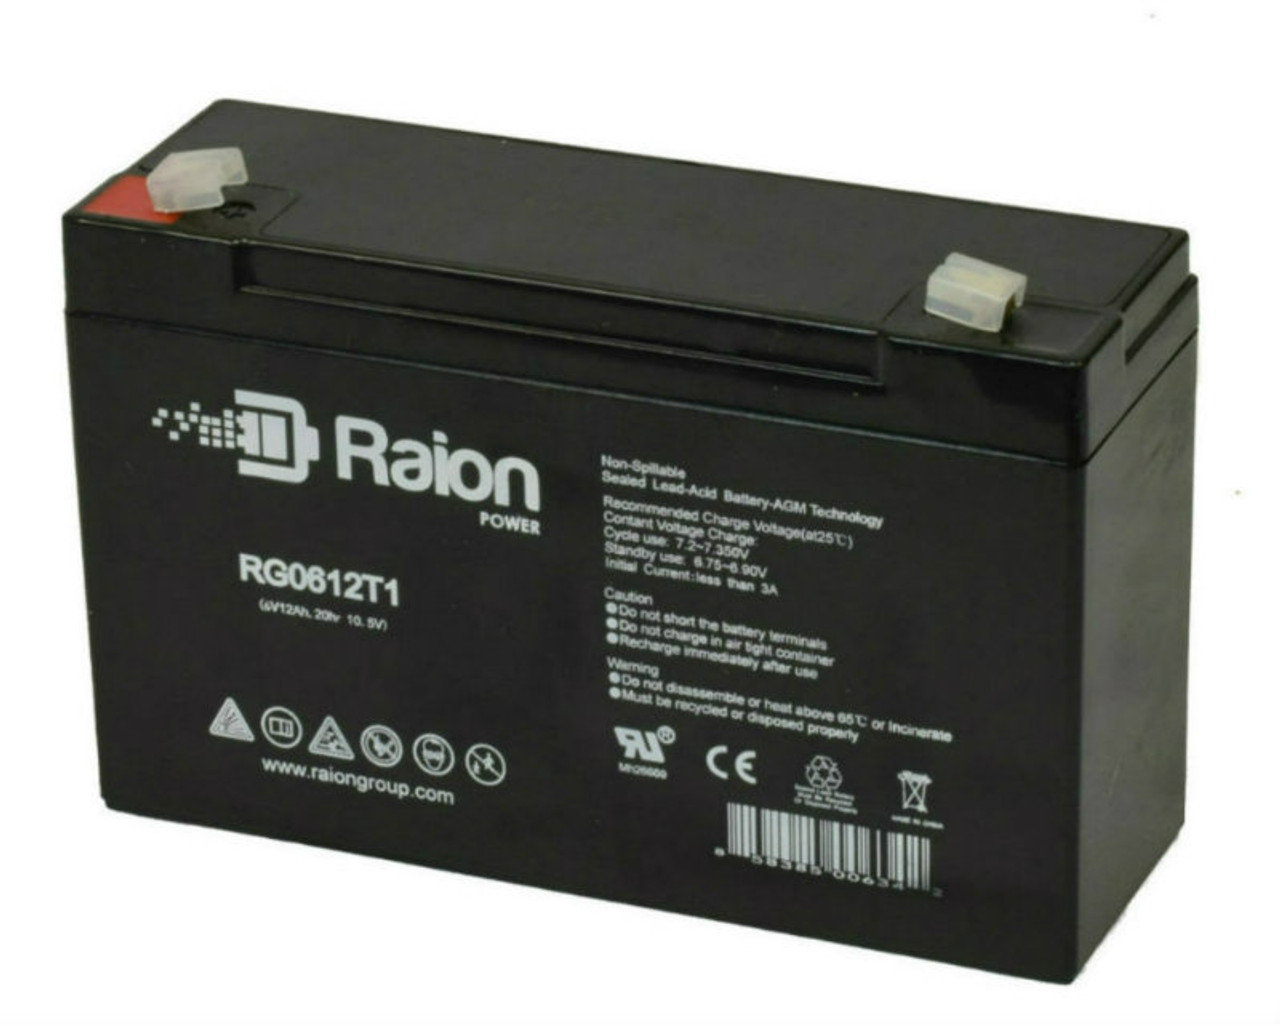 Raion Power RG06120T1 Replacement Emergency Light Battery for Elan 1628